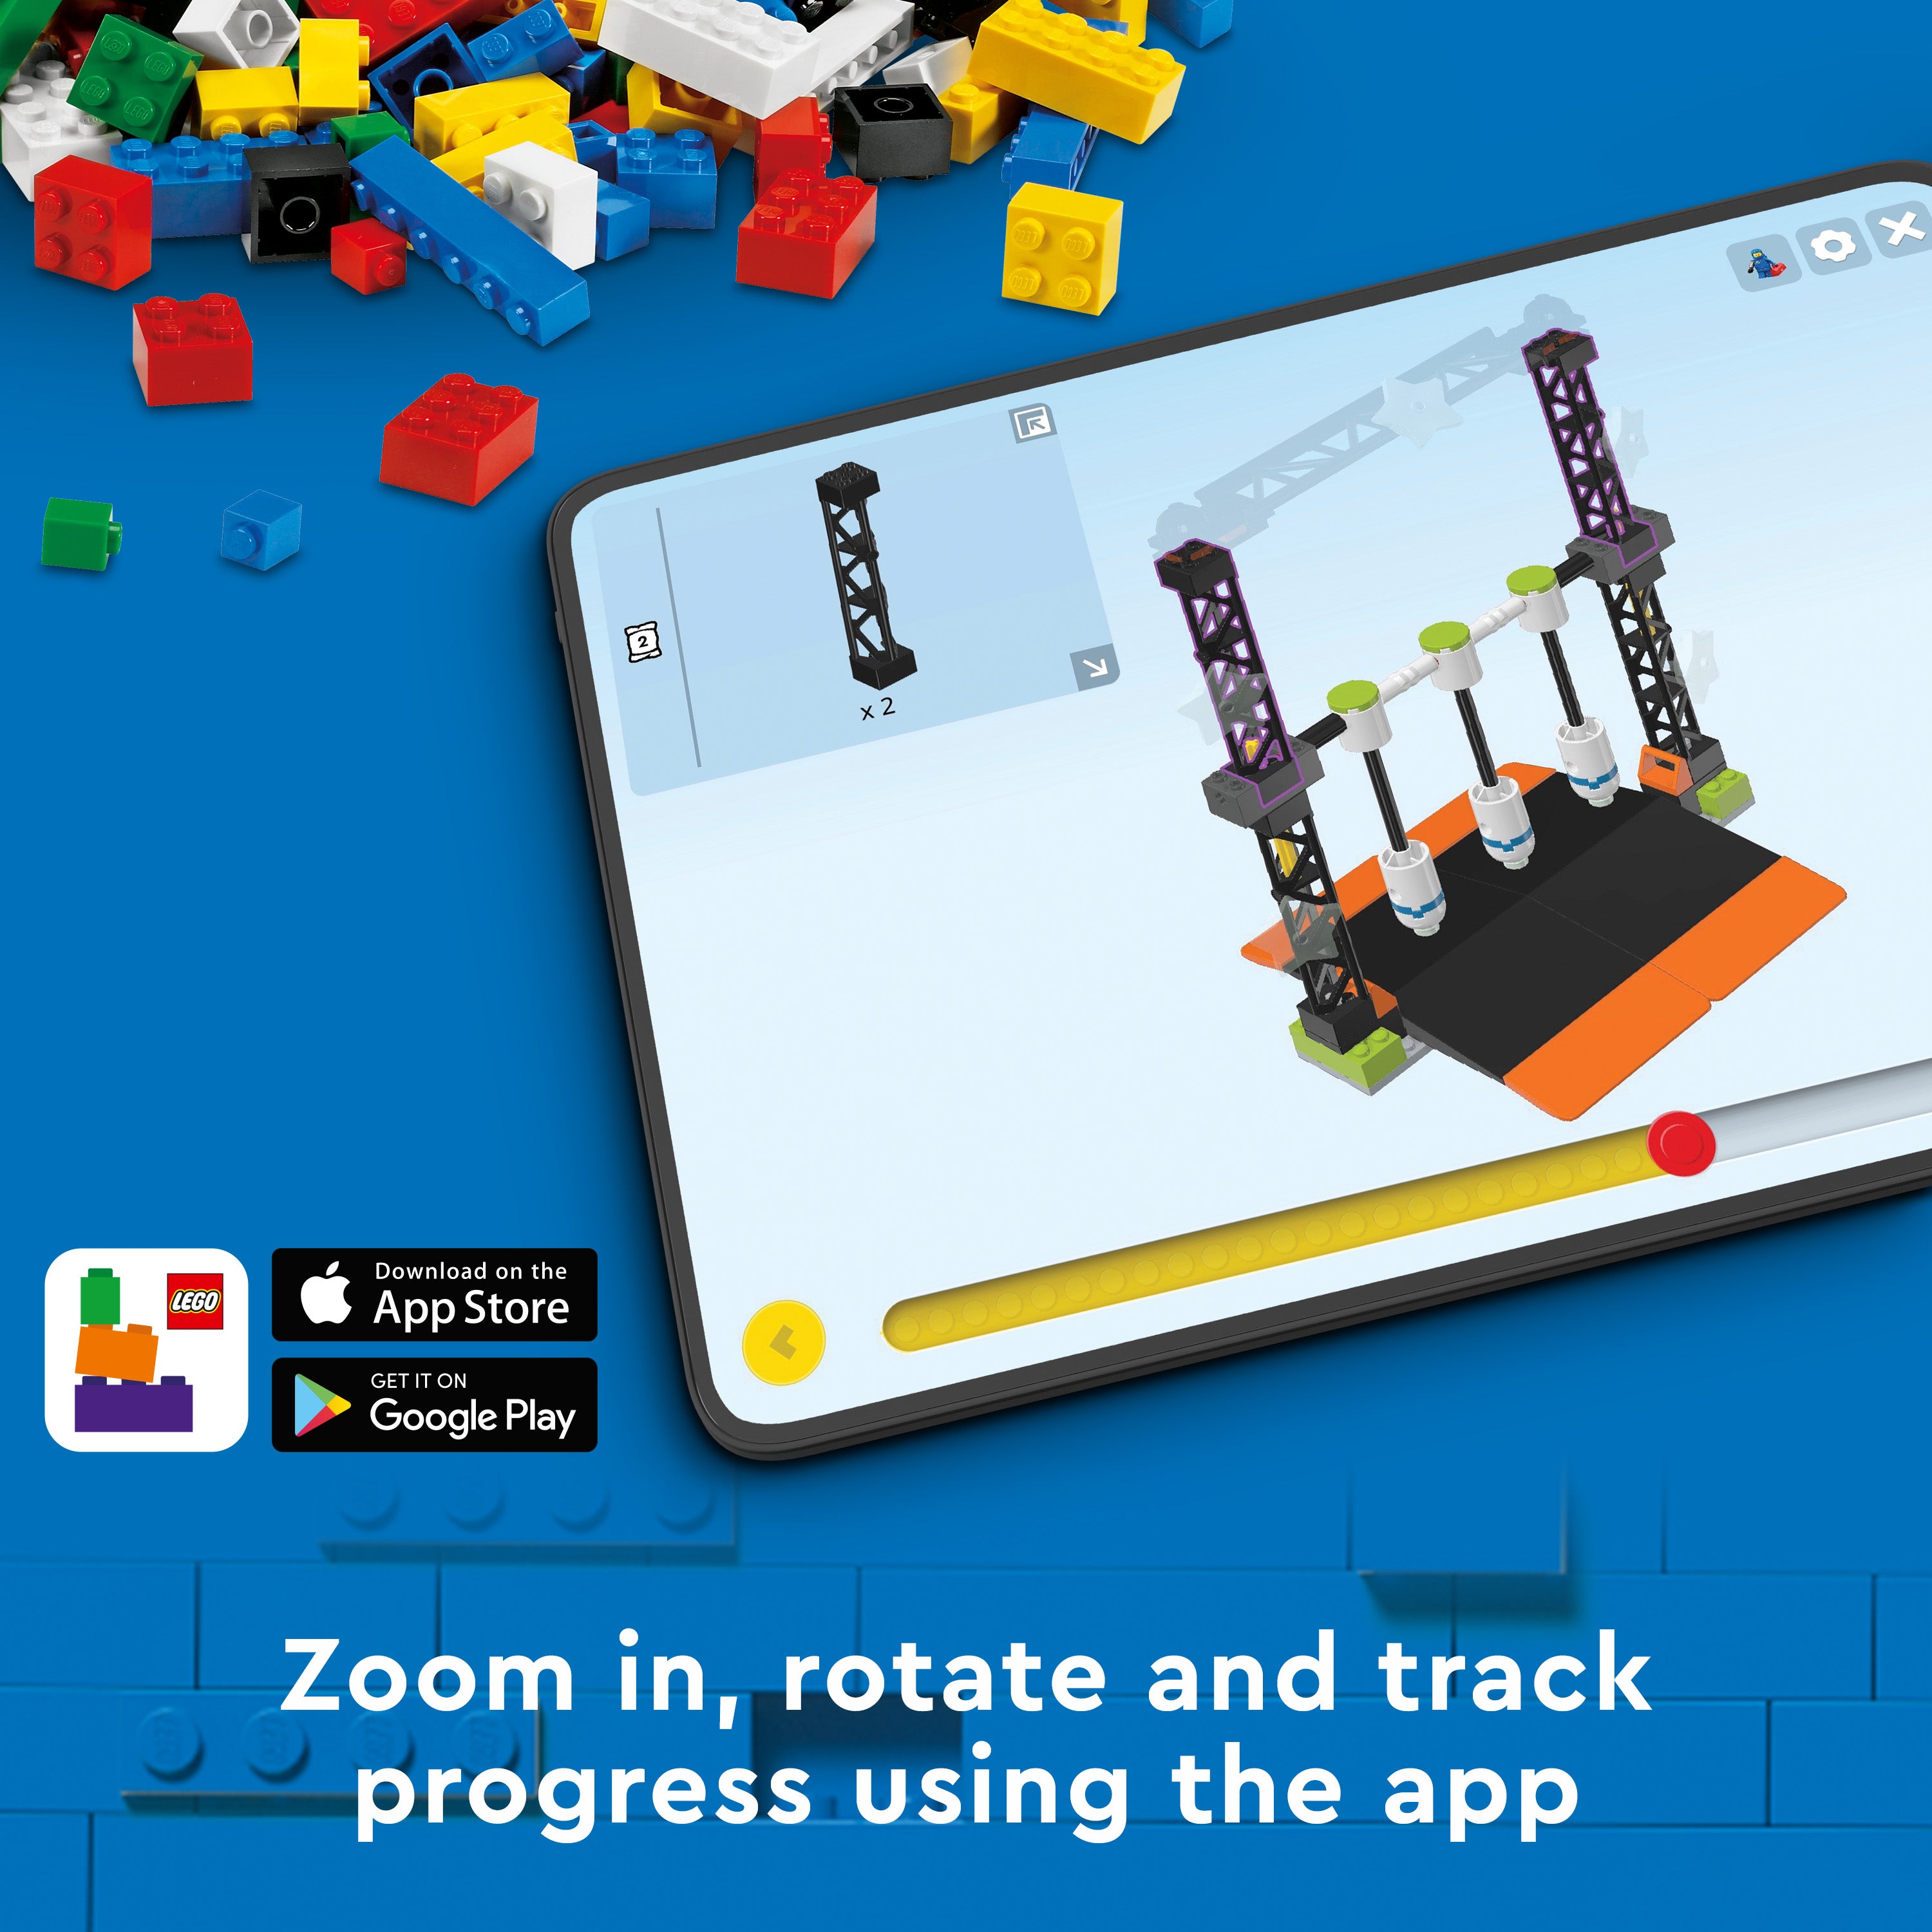 Lego 60385 Construction Digger